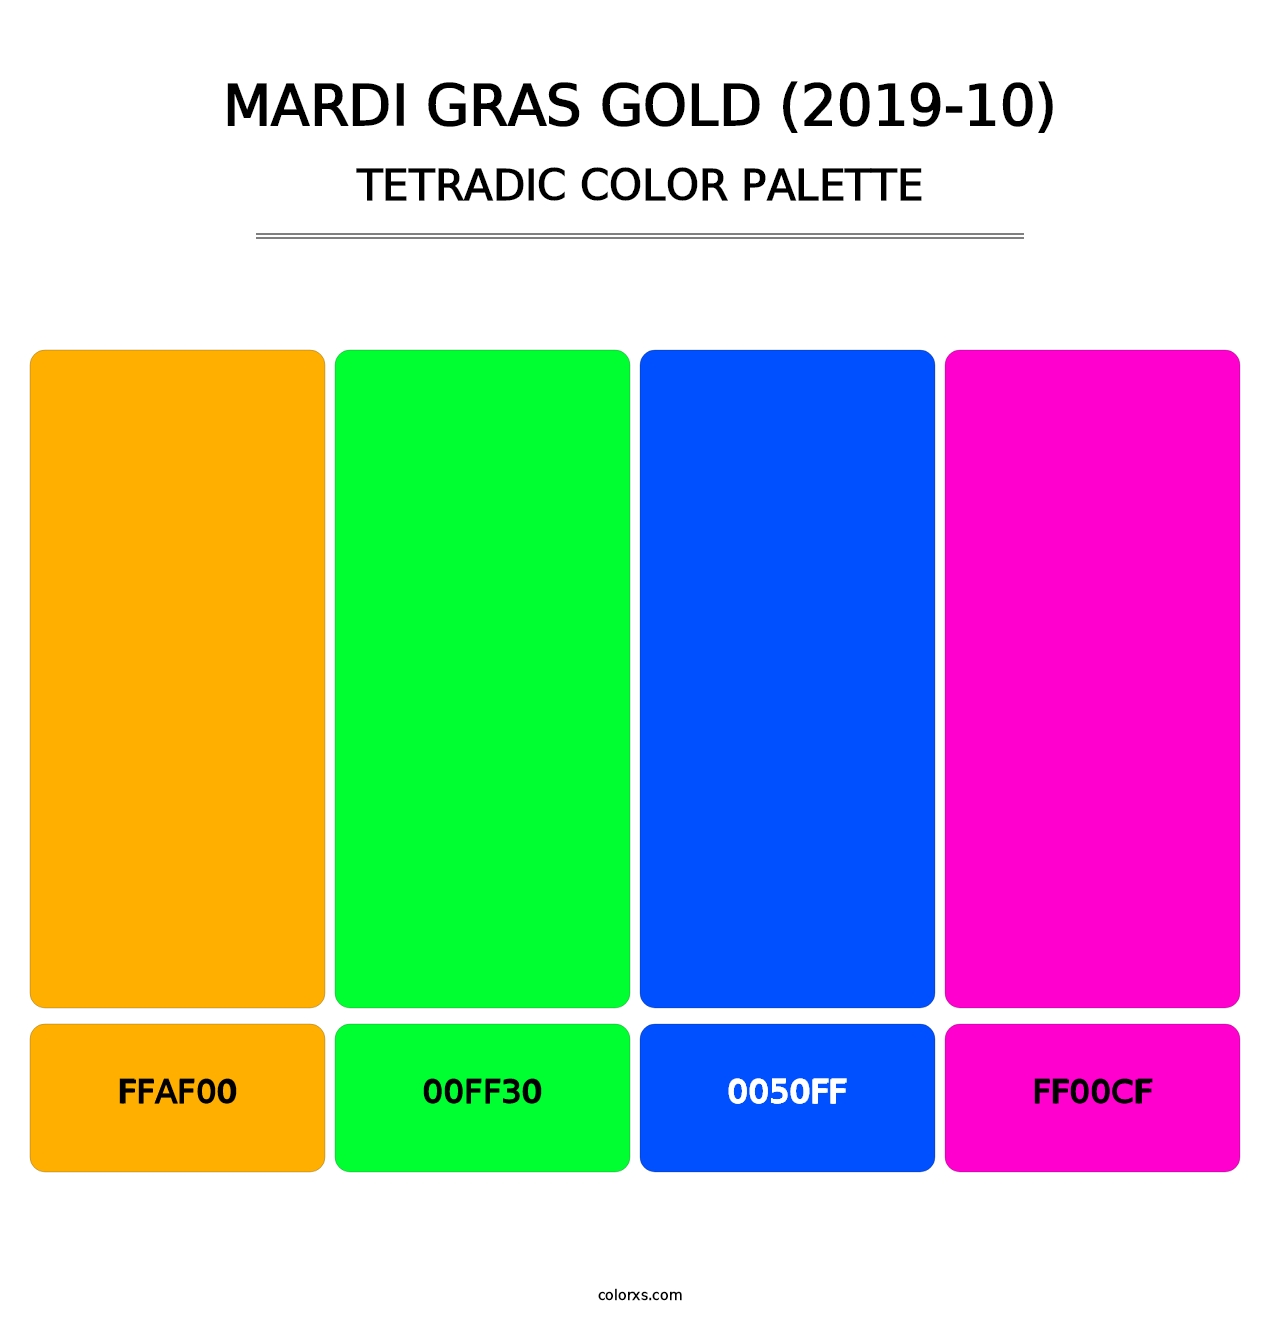 Mardi Gras Gold (2019-10) - Tetradic Color Palette